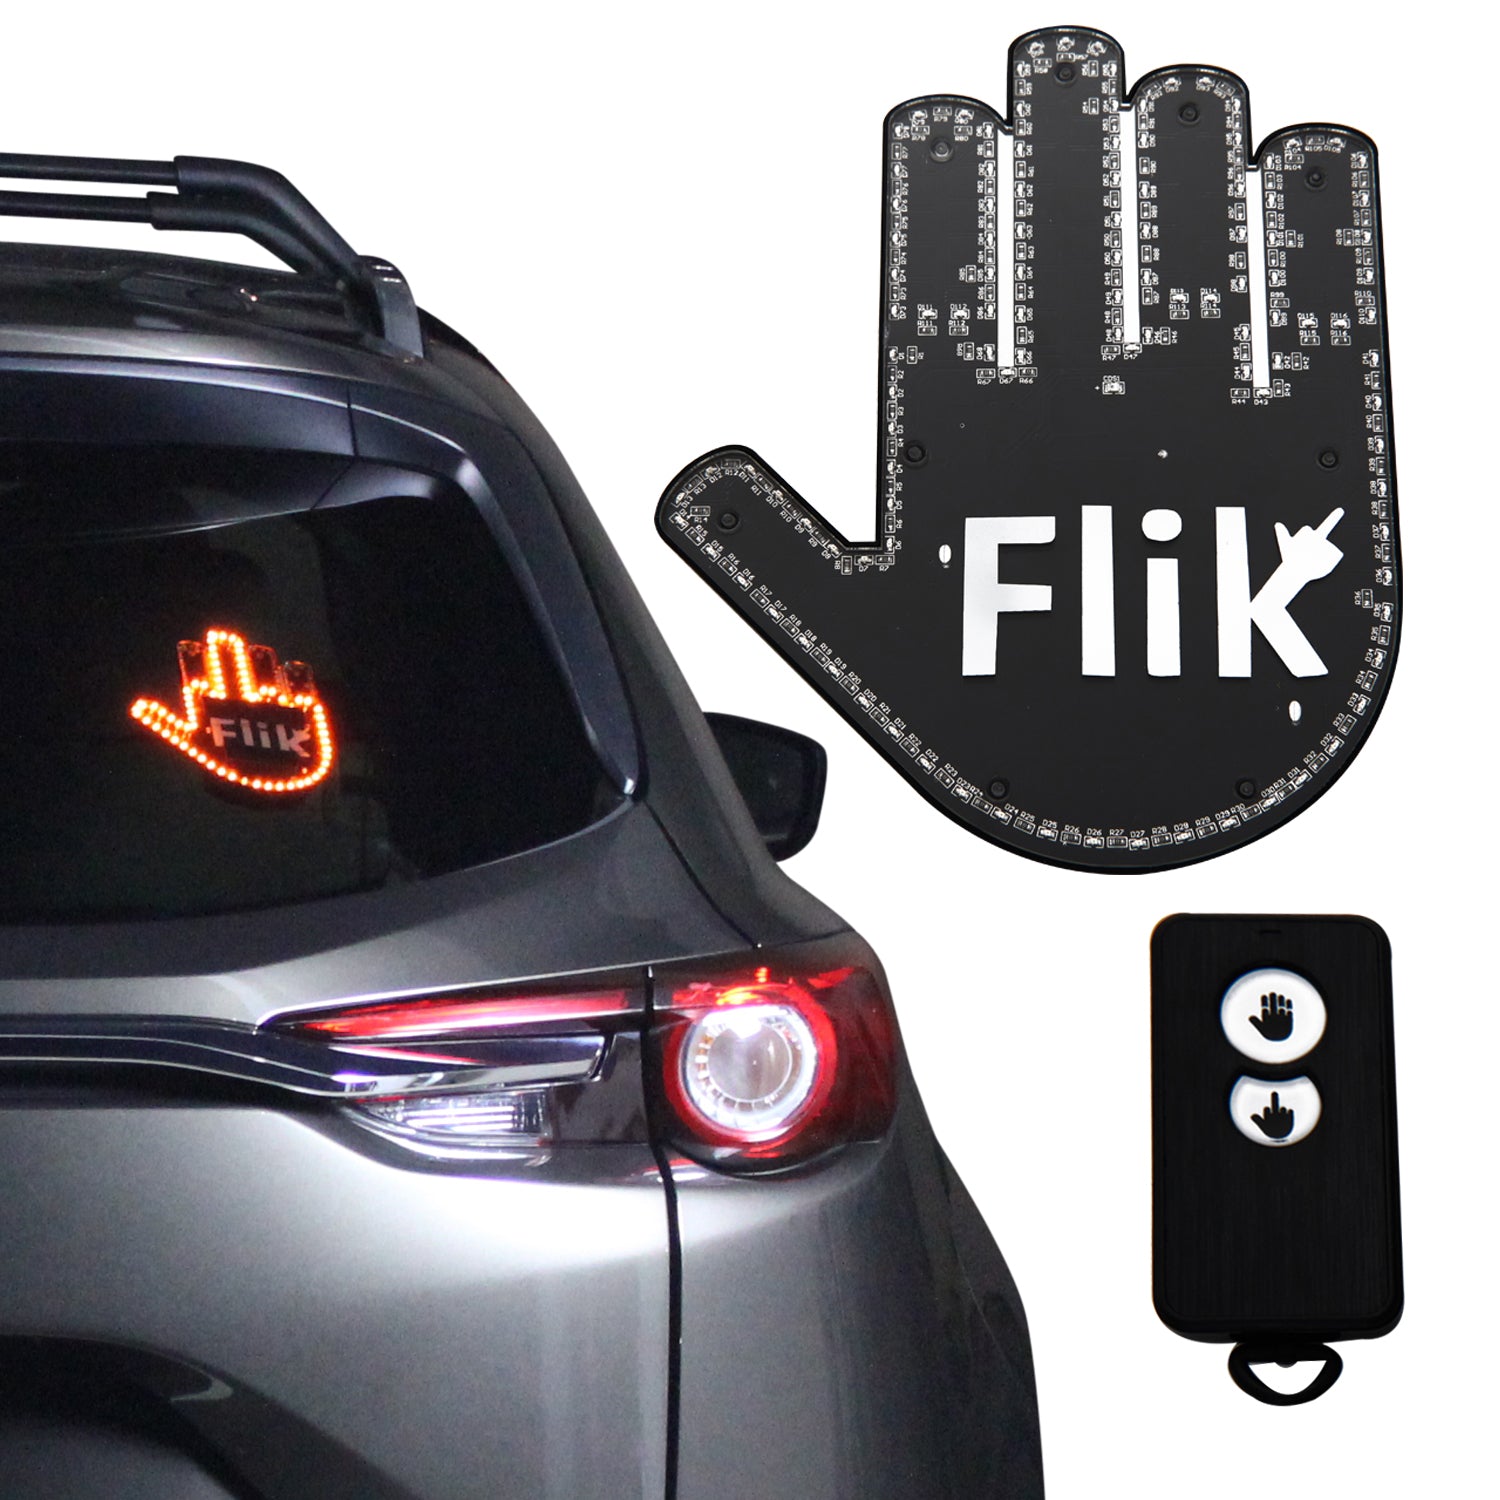 FLIK Original Middle Finger Light - Give The Bird & Wave to Drivers 